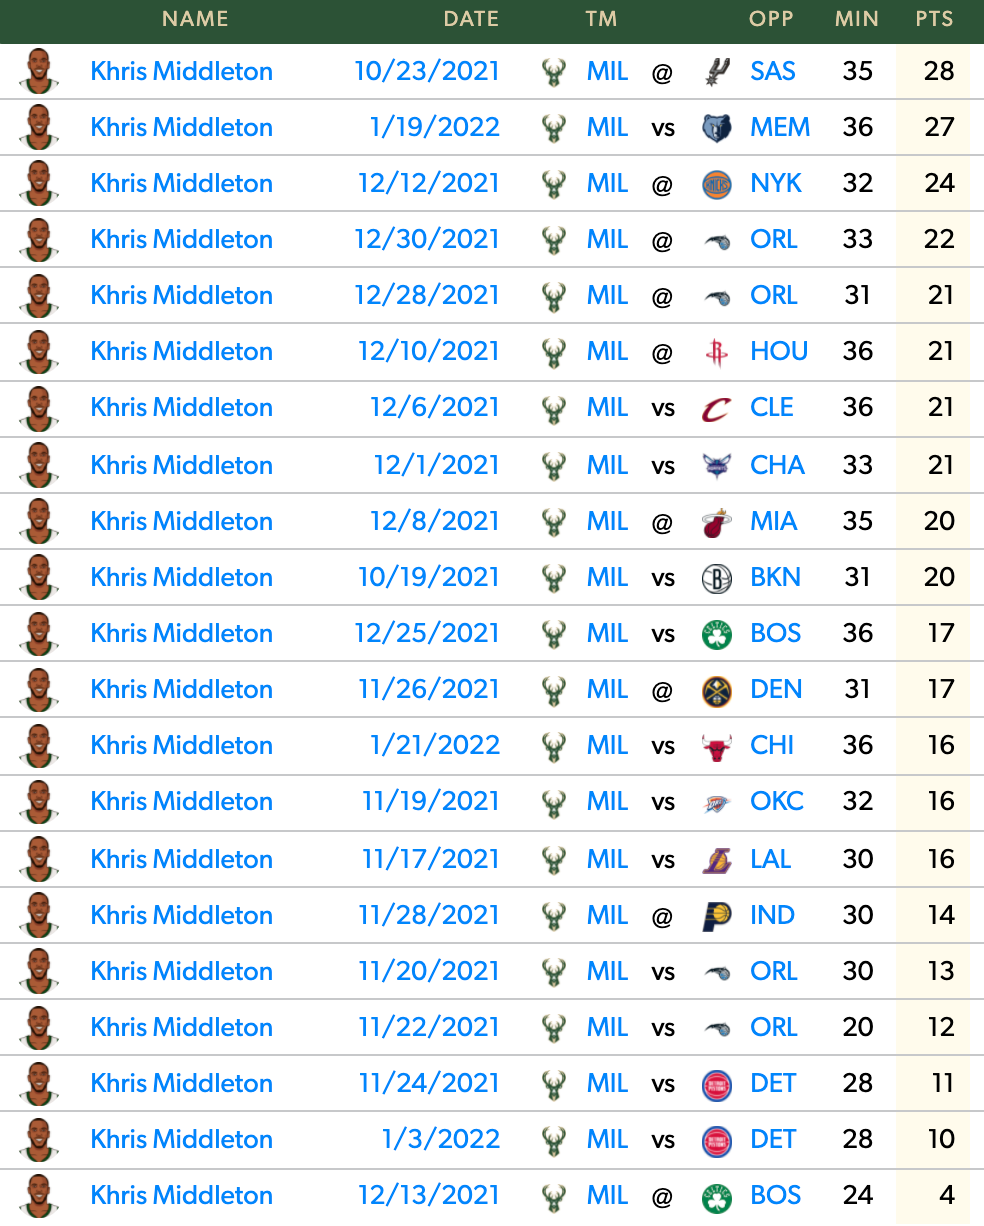 Middleton's game log with both Giannis Antetokounmpo and Jrue Holiday this season.